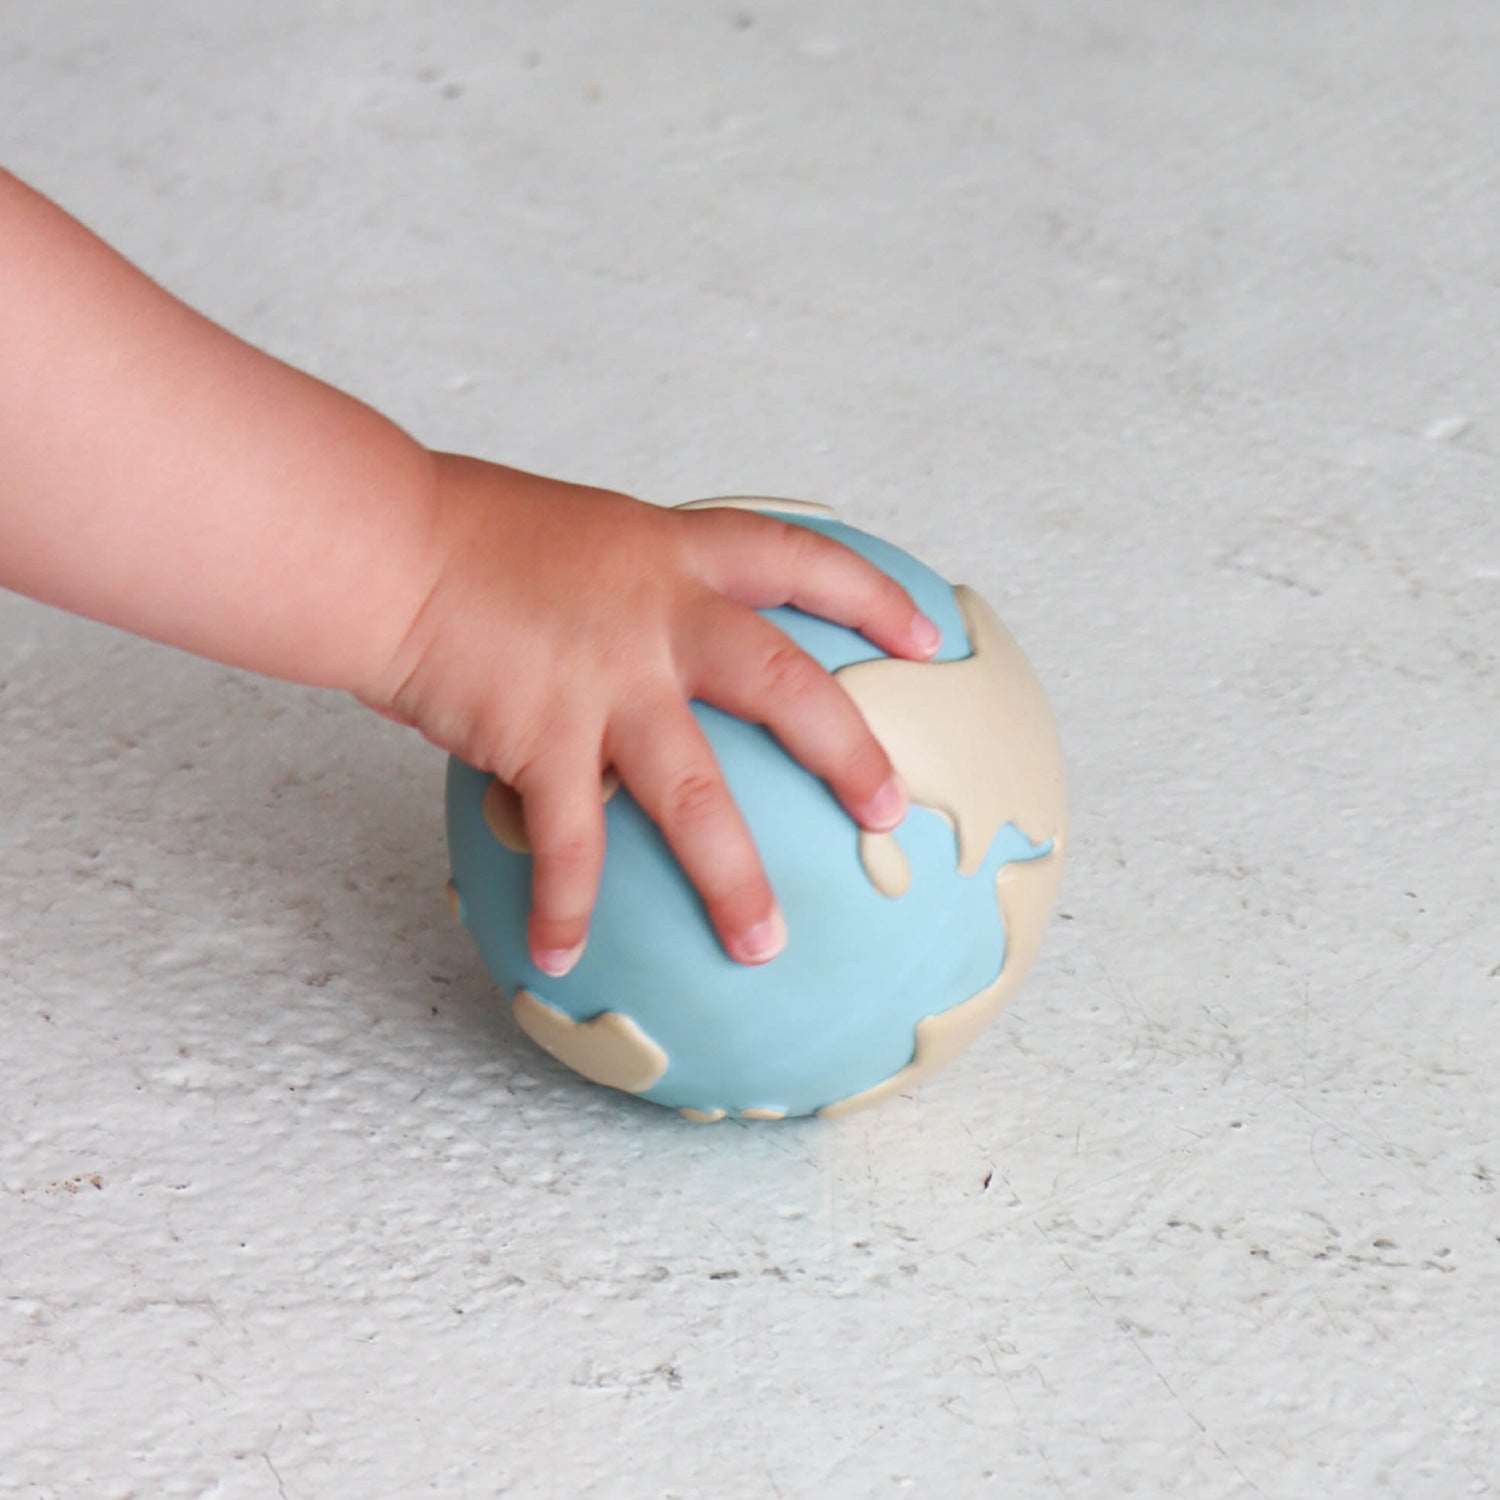 Earthy the World Ball Baby Teether & Bath Toy - Oli&Carol